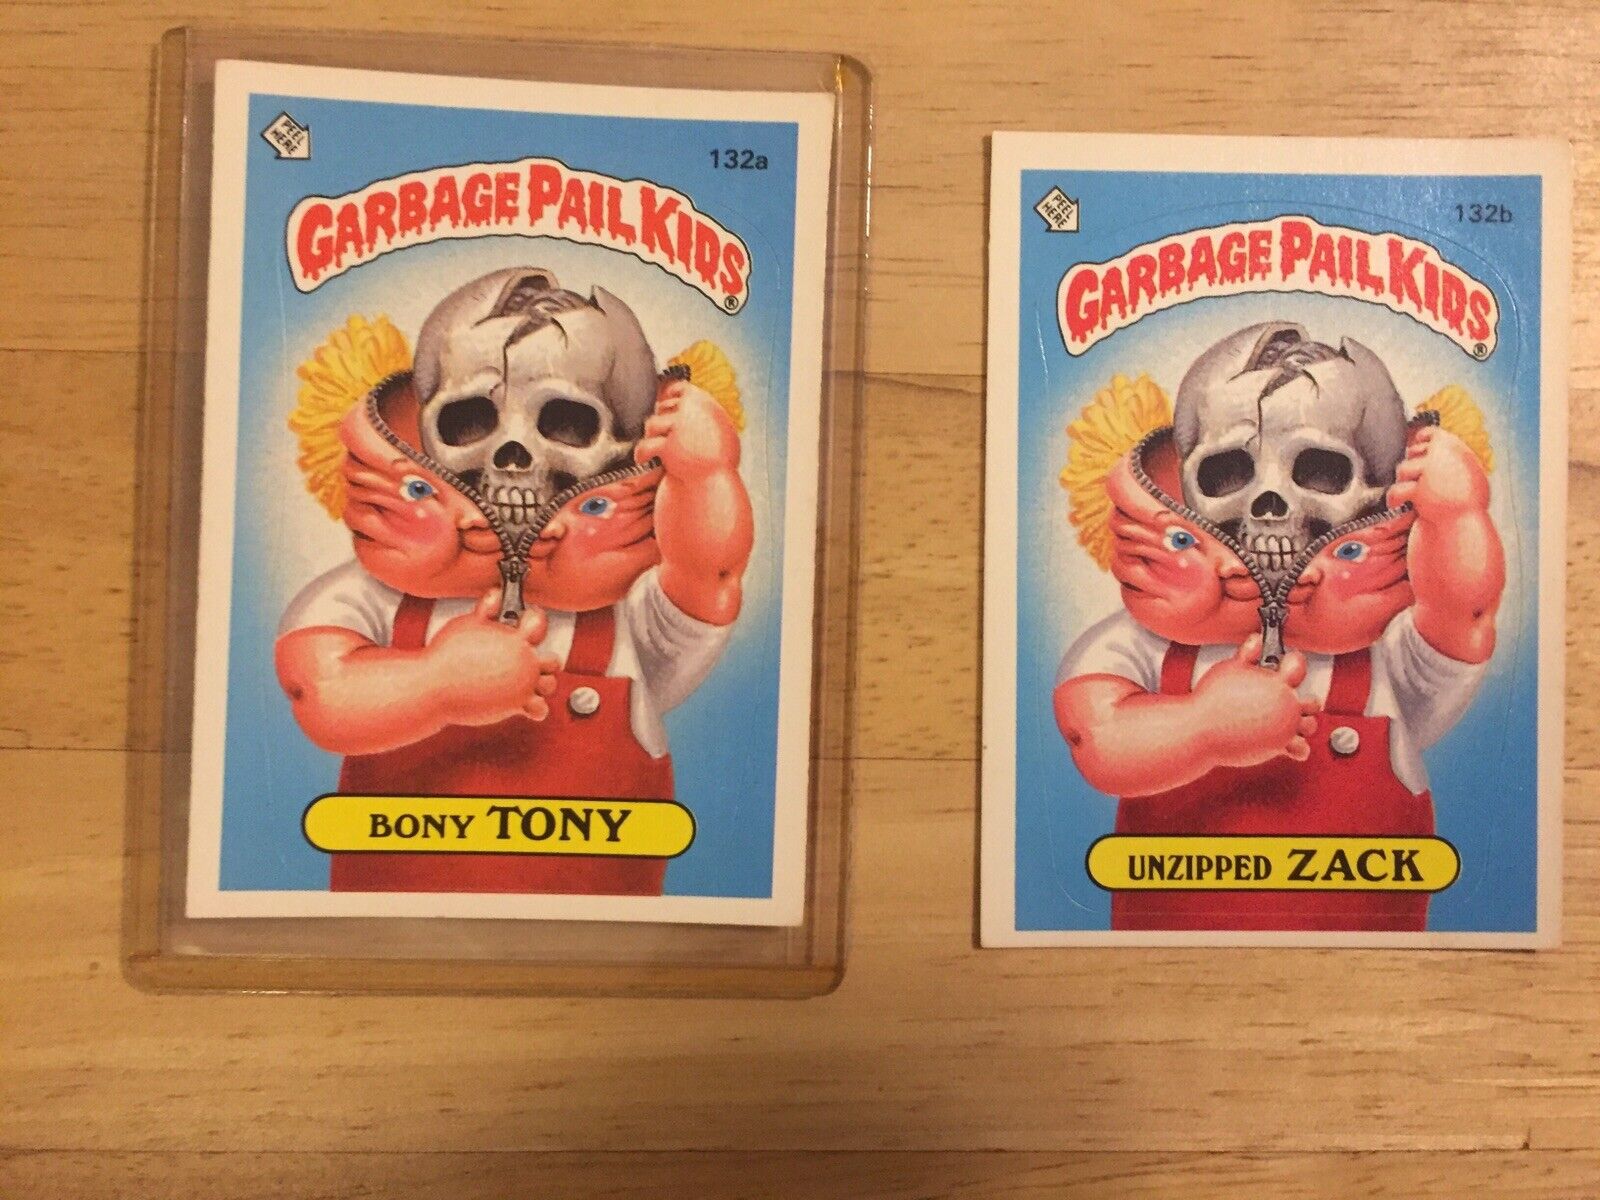 1986 Garbage Pail Kids Bony Tony Card #132a & #132b Unzipped Jack Set Lot Of 2